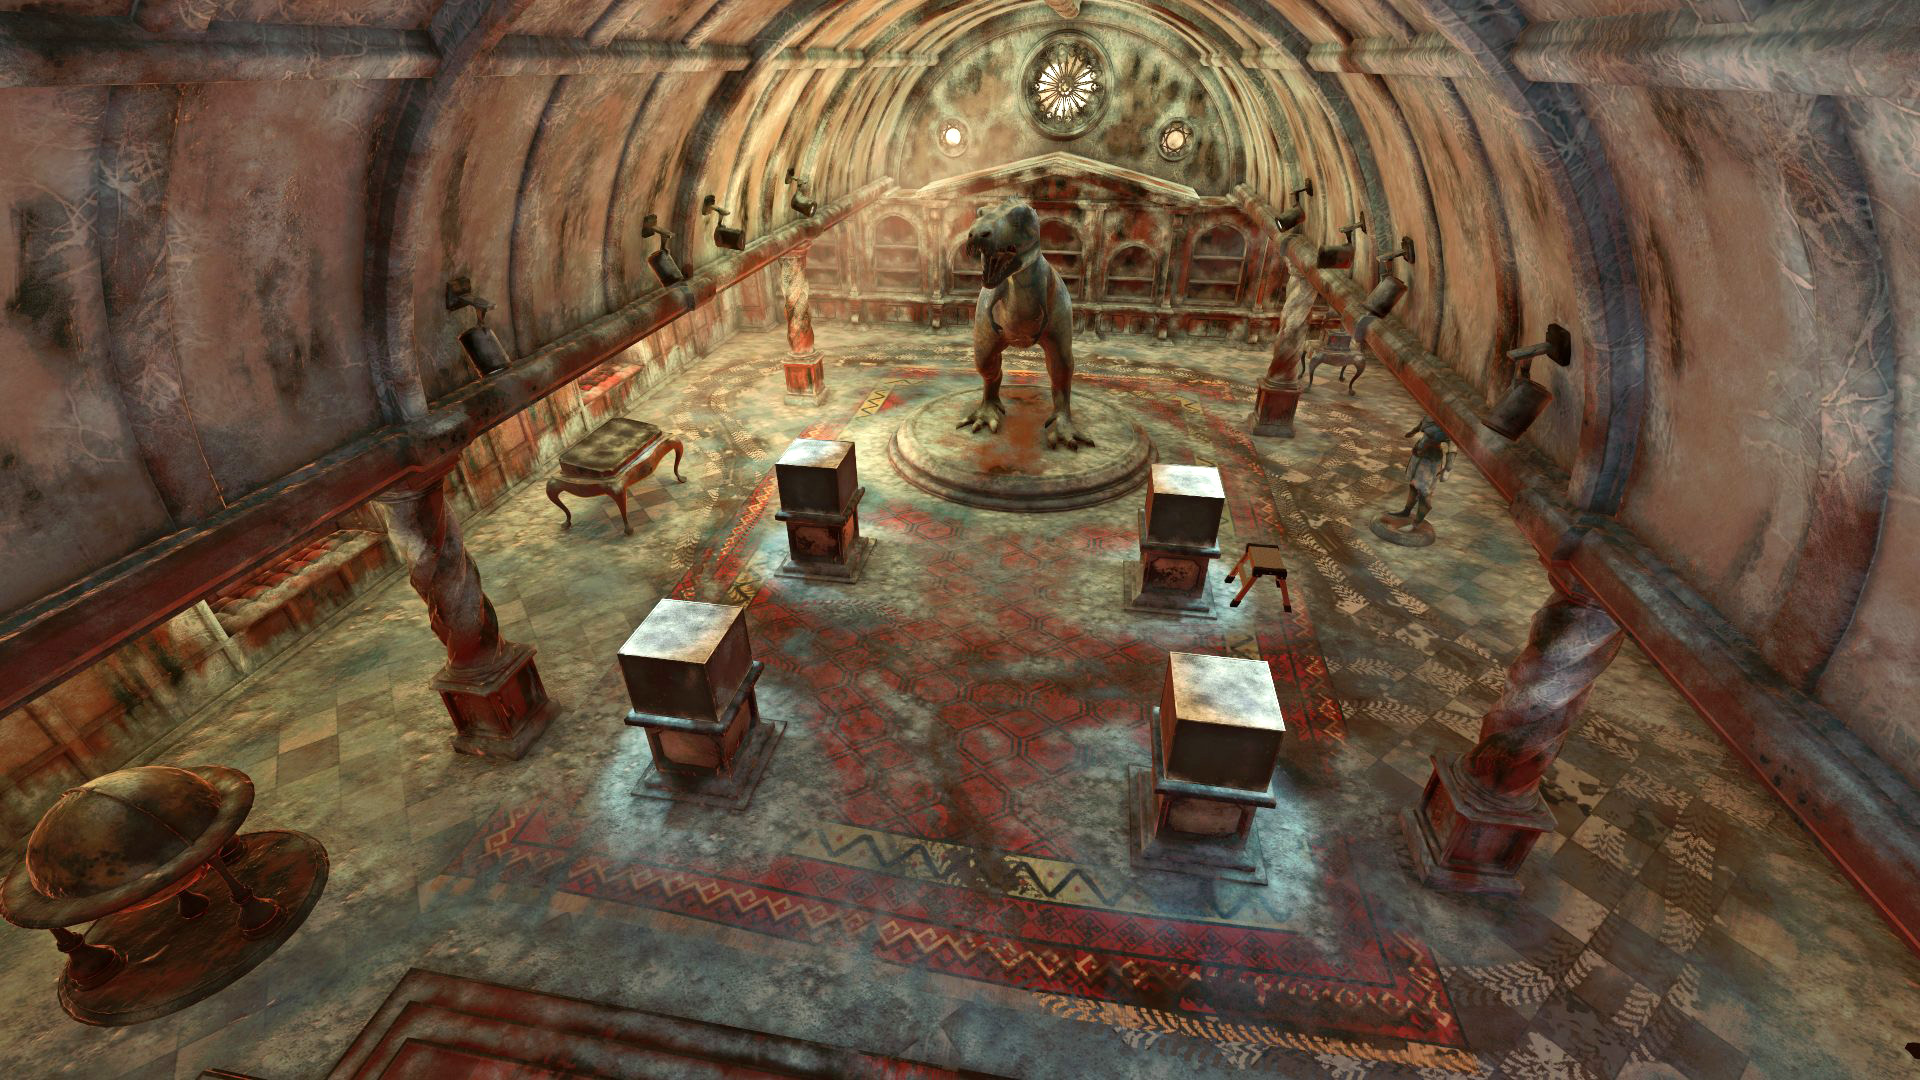 Hose down Croft Manor in PowerWash Simulator's free Tomb Raider expansion